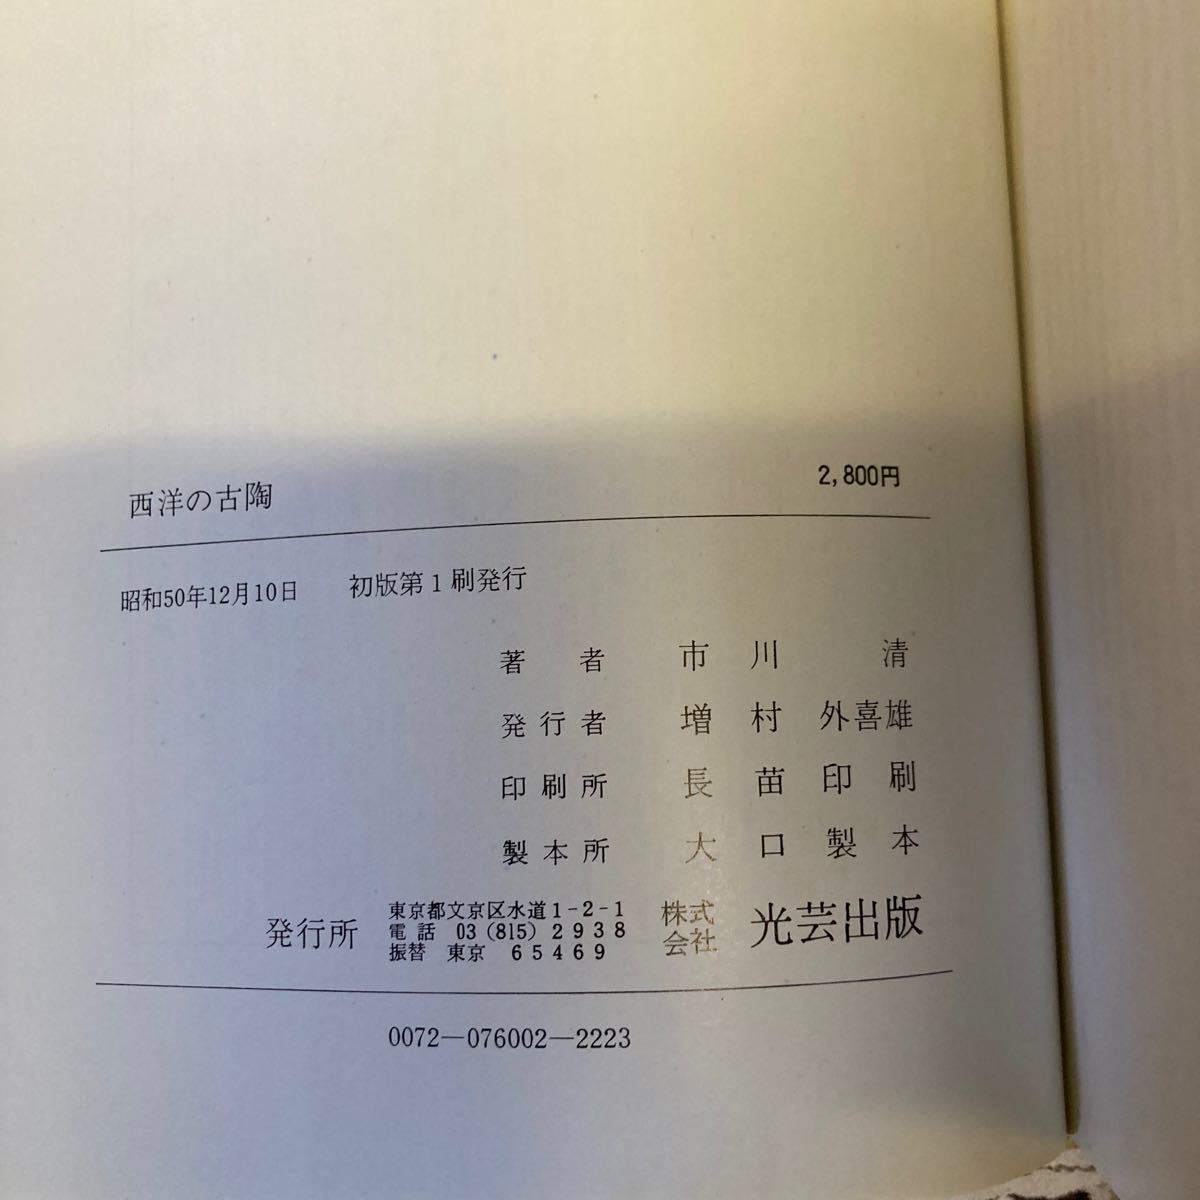 M774 西洋の骨董 市川清 光芸出版 昭和50年発行_画像3